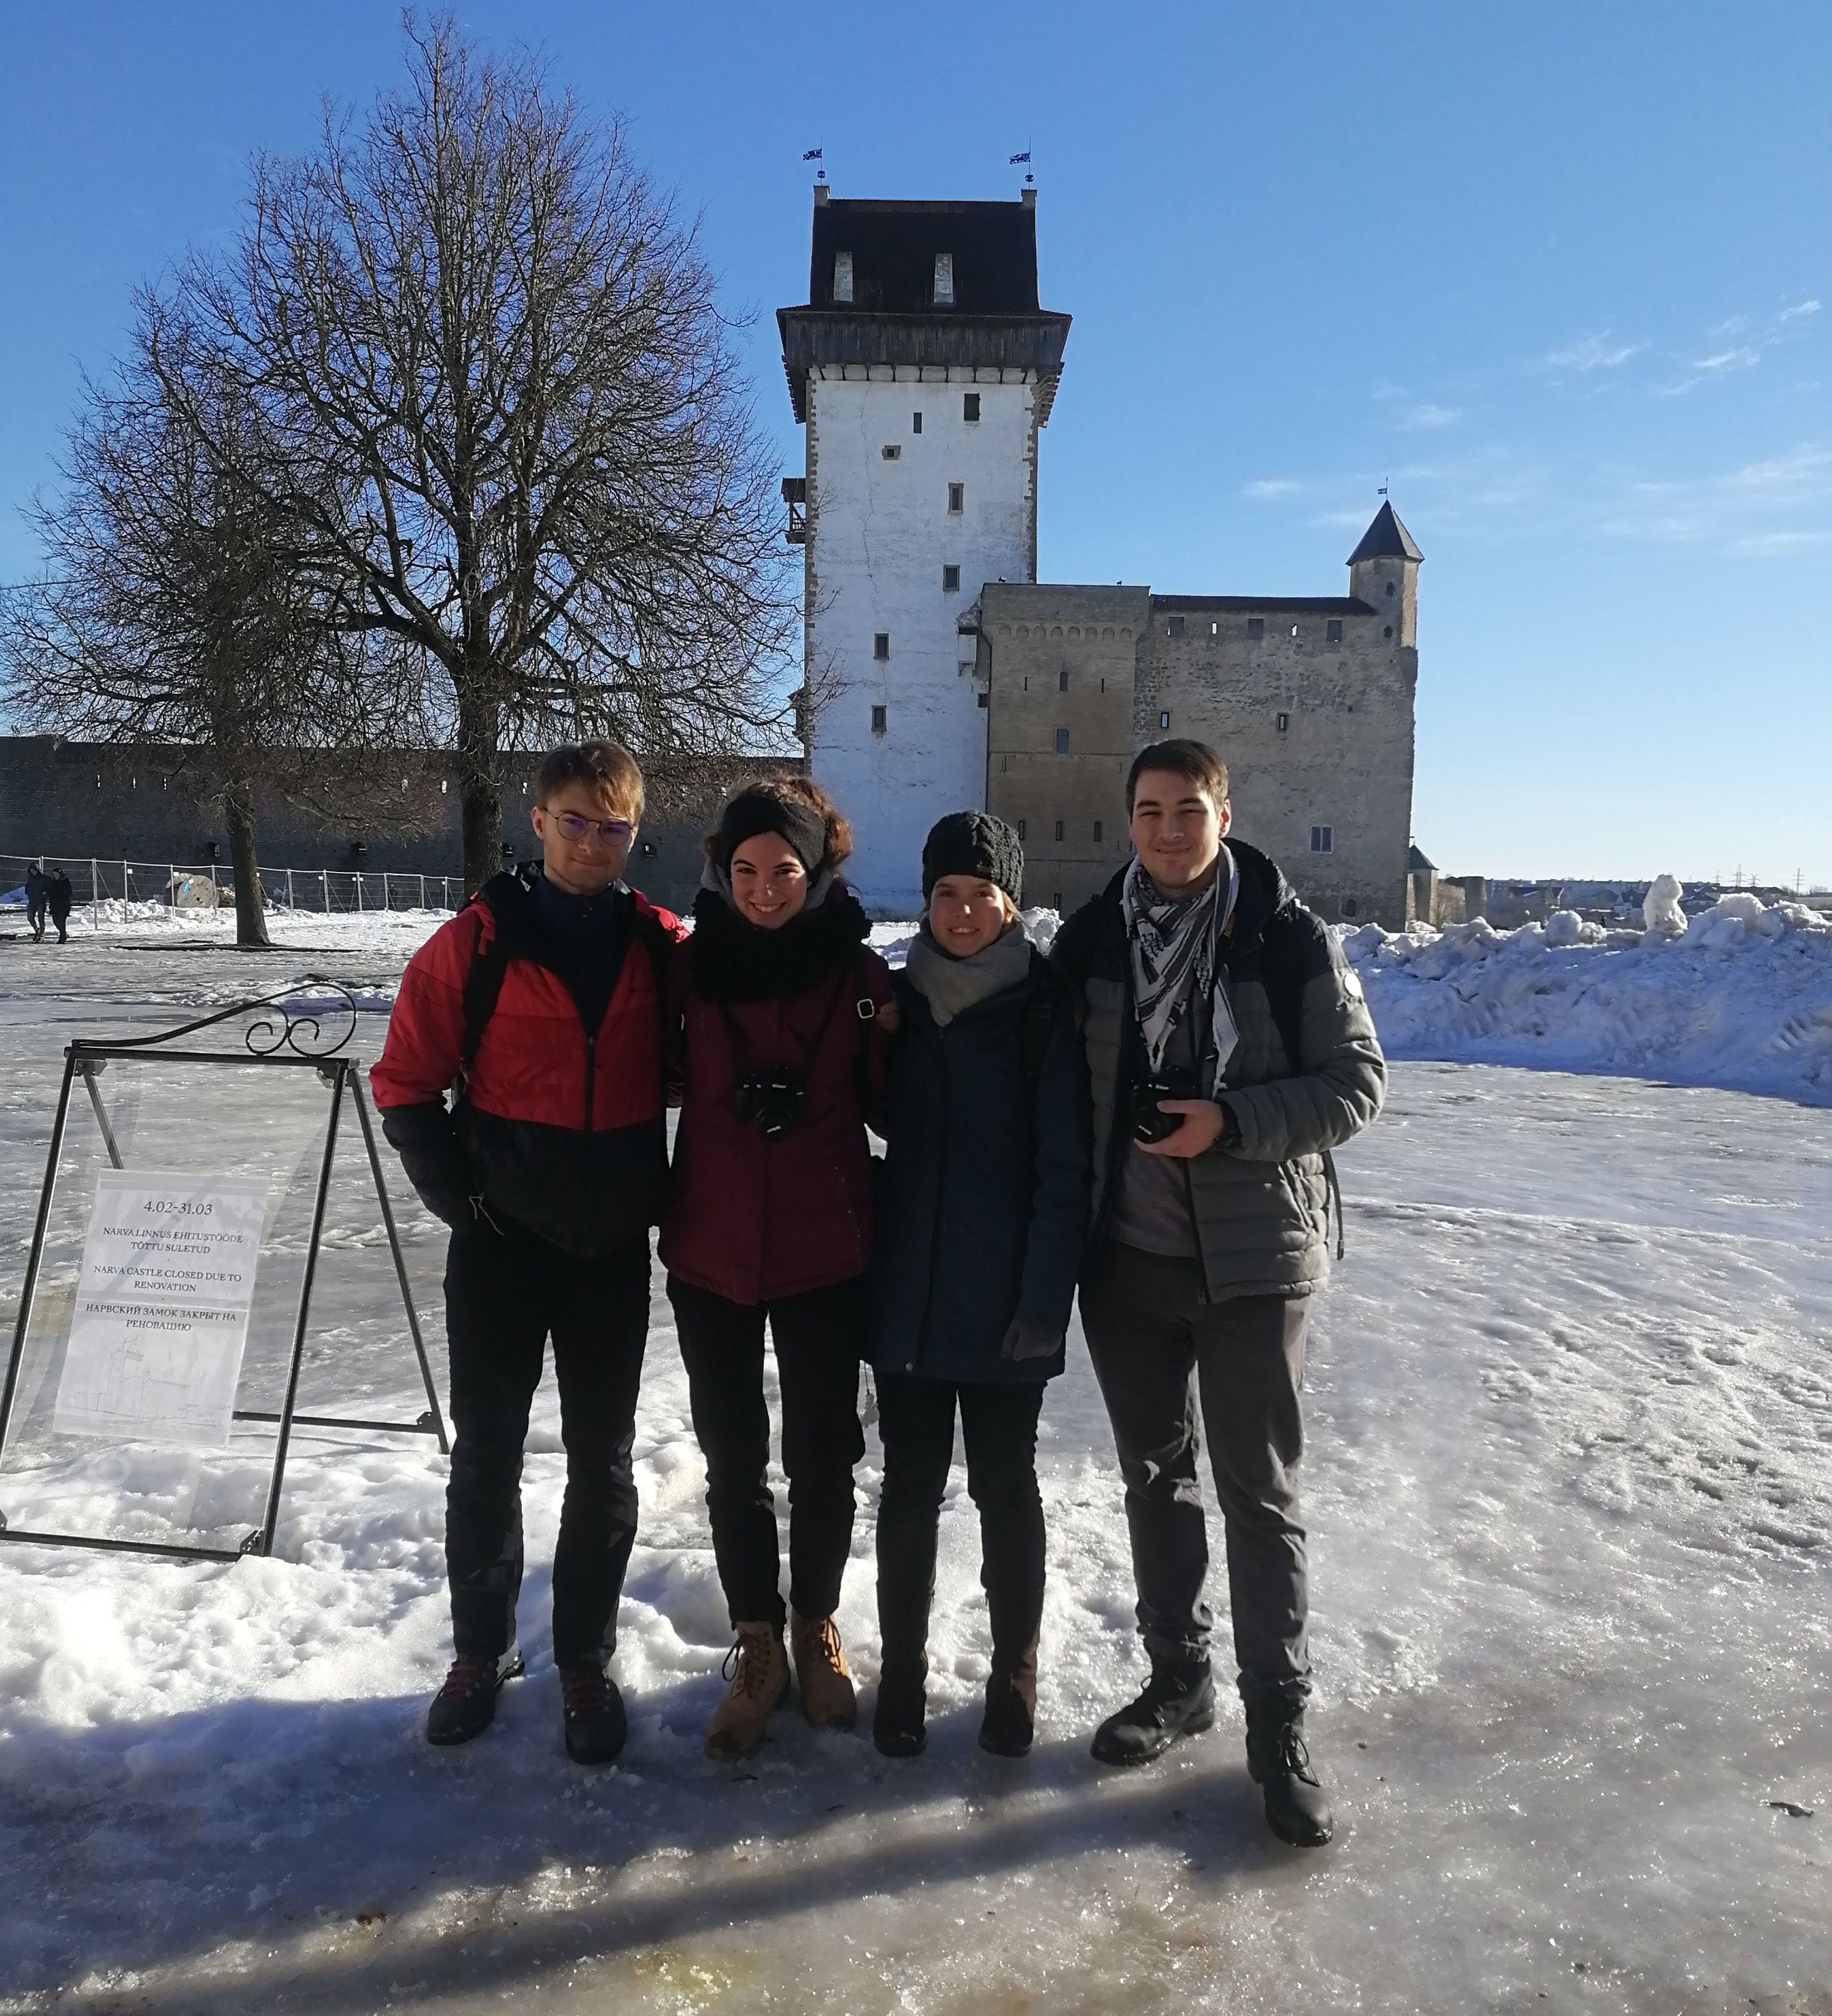 Surviving Estonian winter VT volunteers style: Dress like an onion!